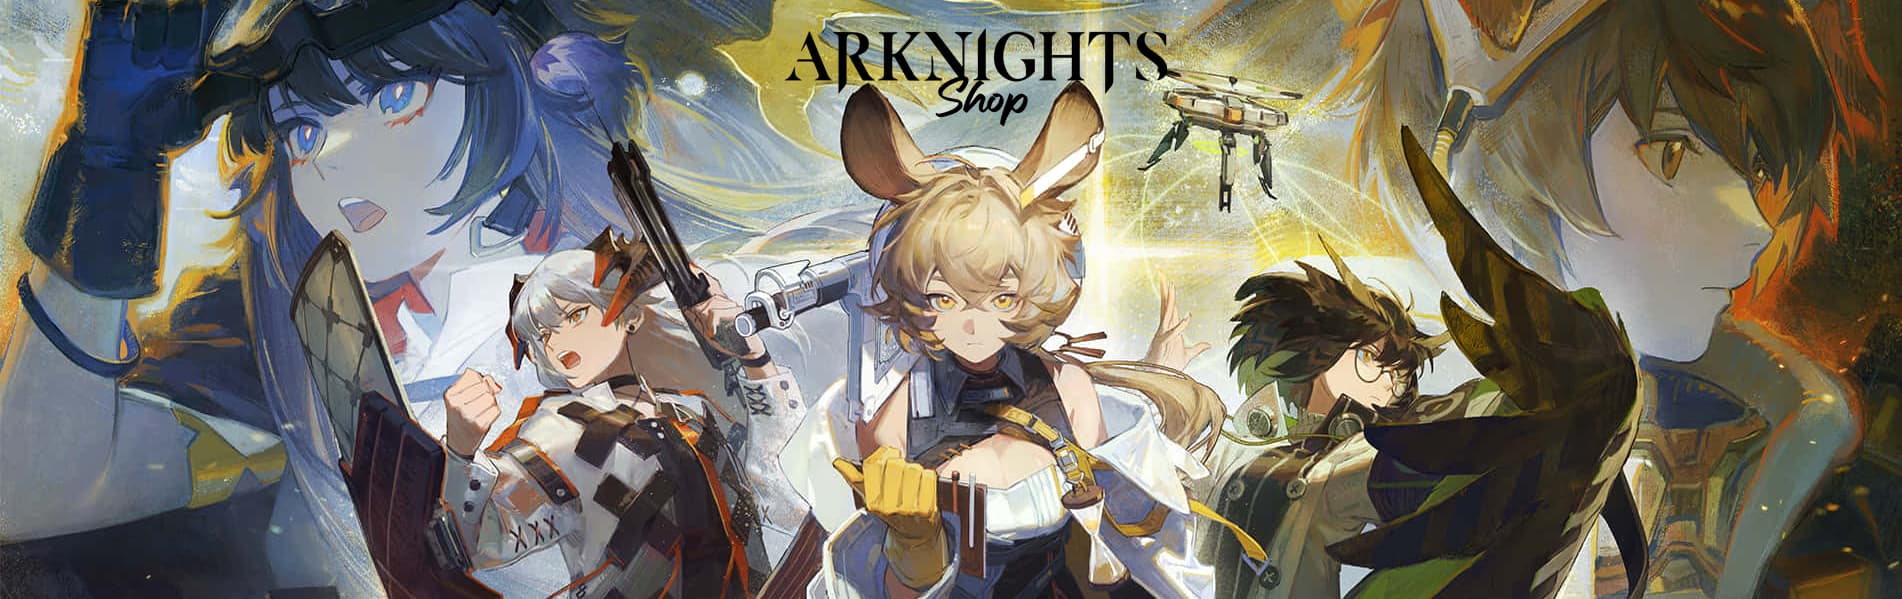 Arknights Shop Banner 1